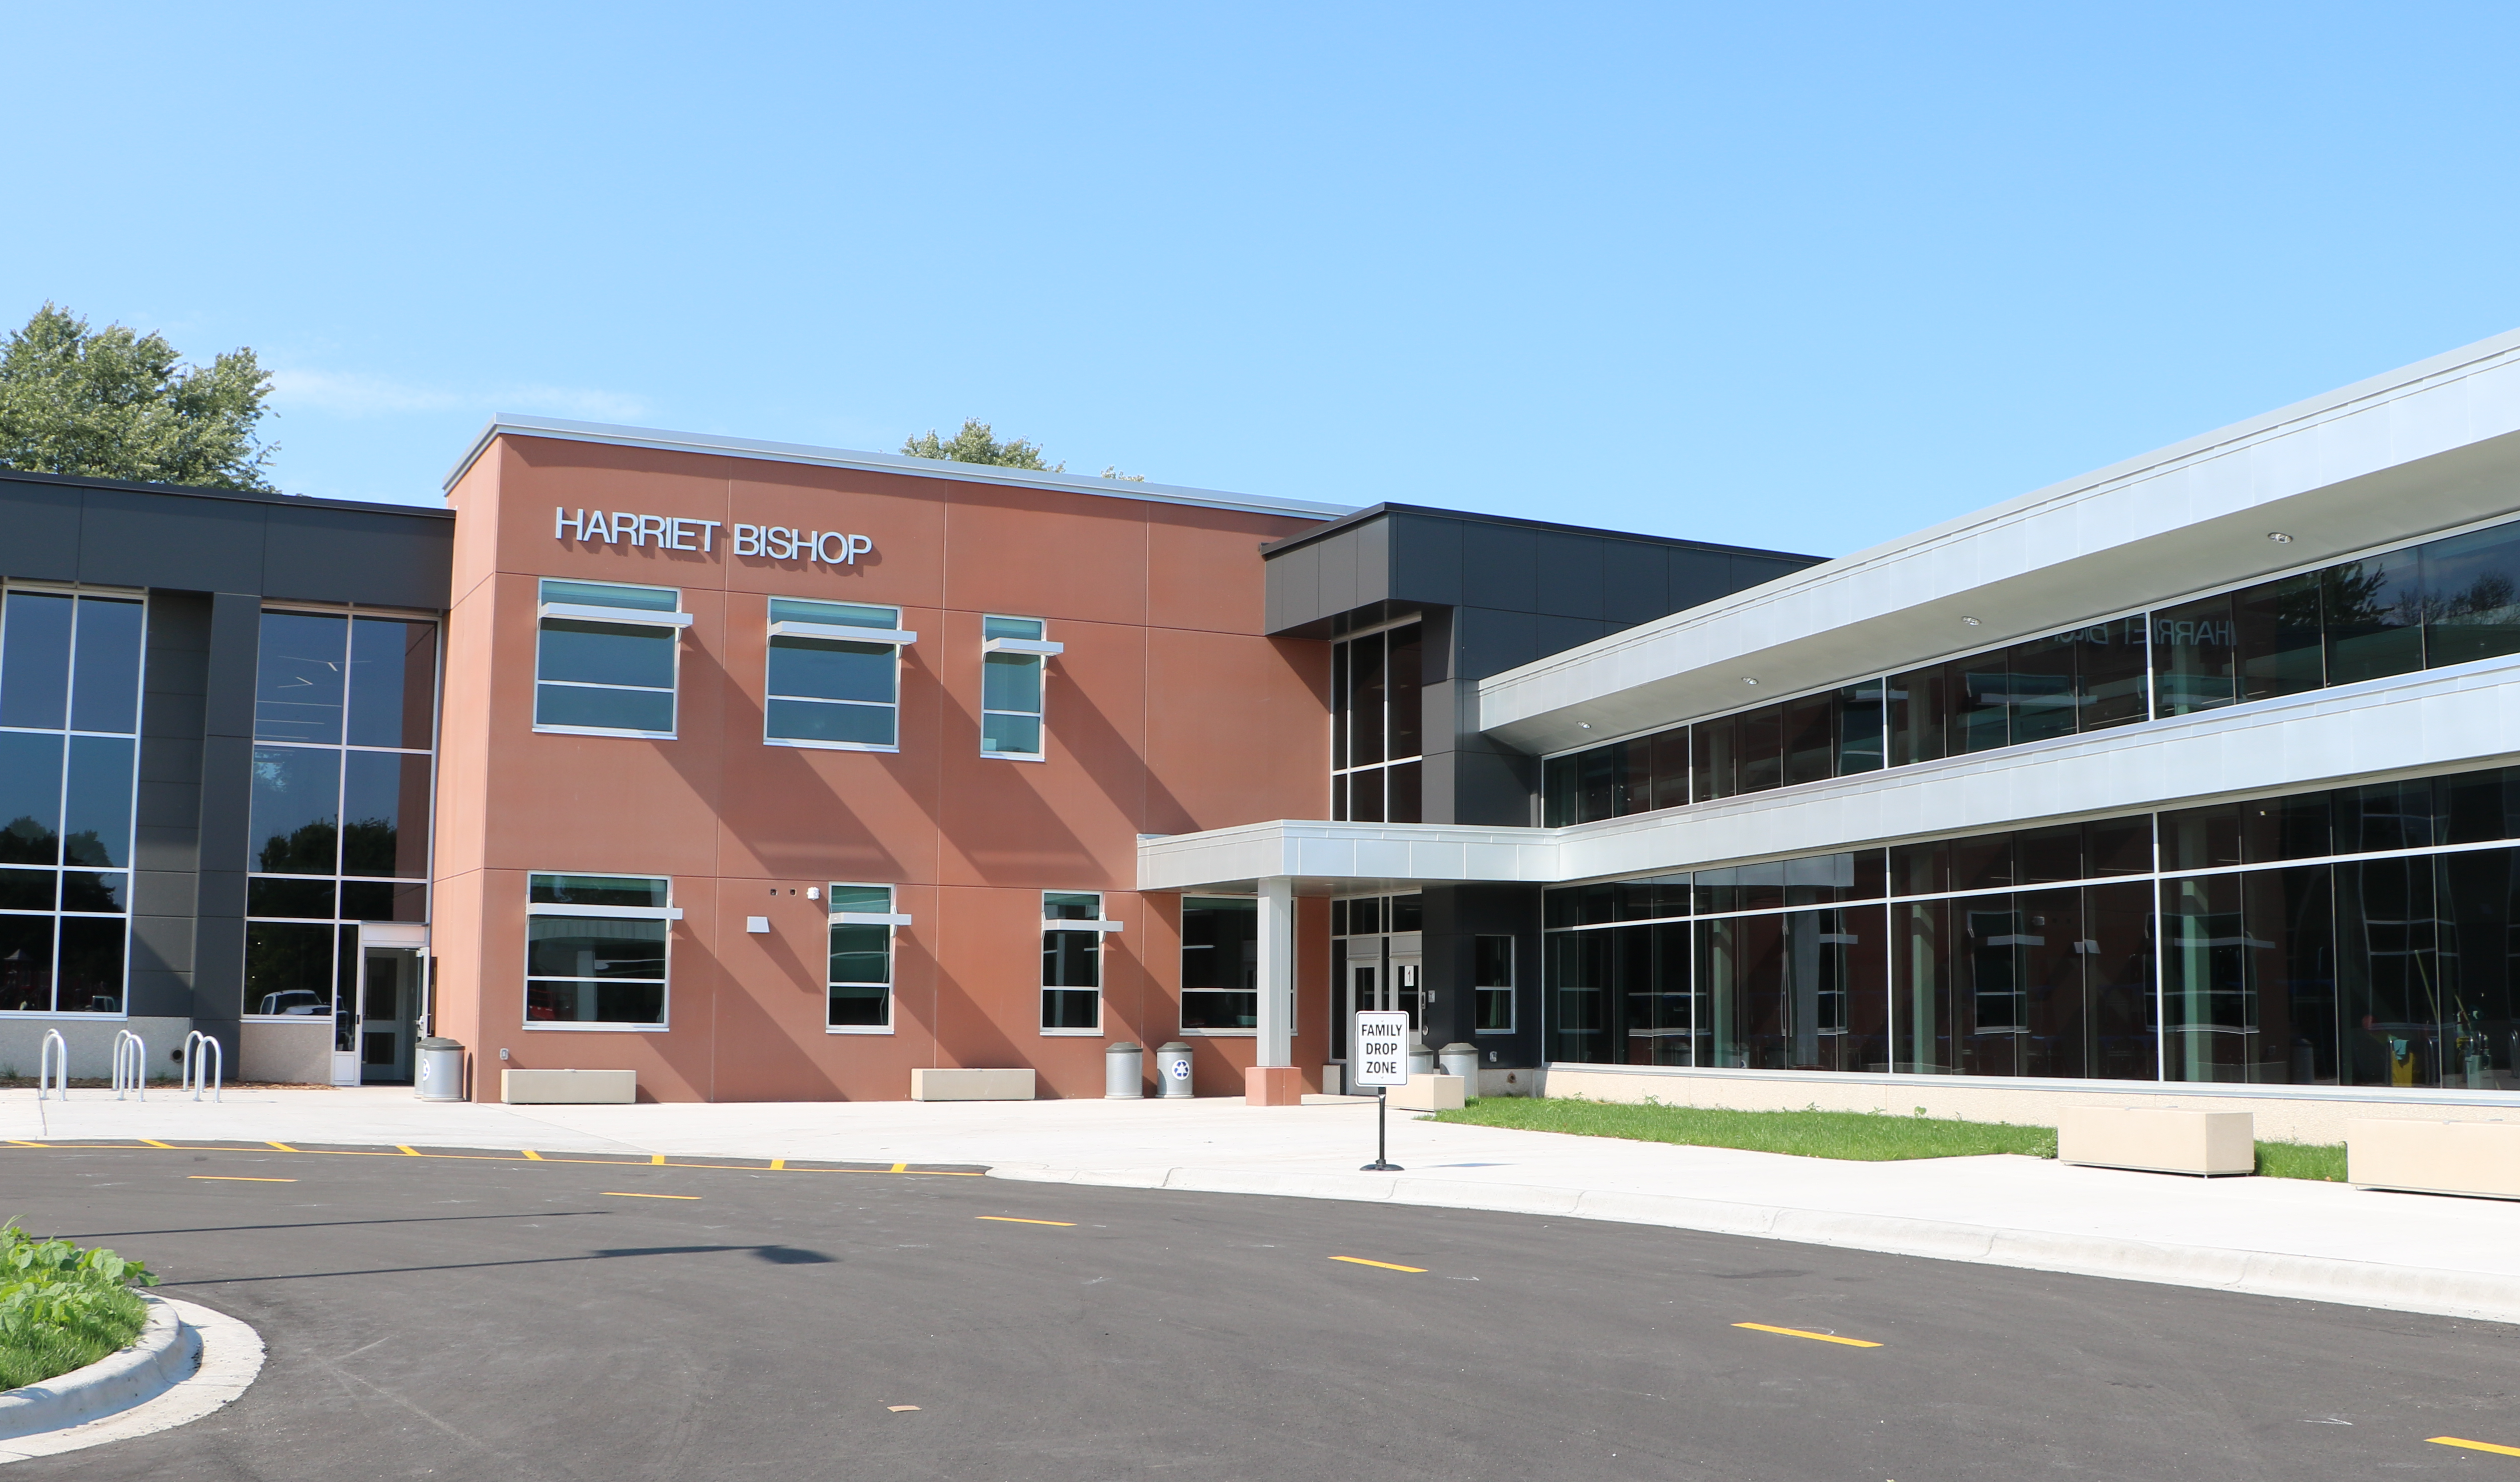 Exterior image of Harriet Bishop Elementary School's front entry.